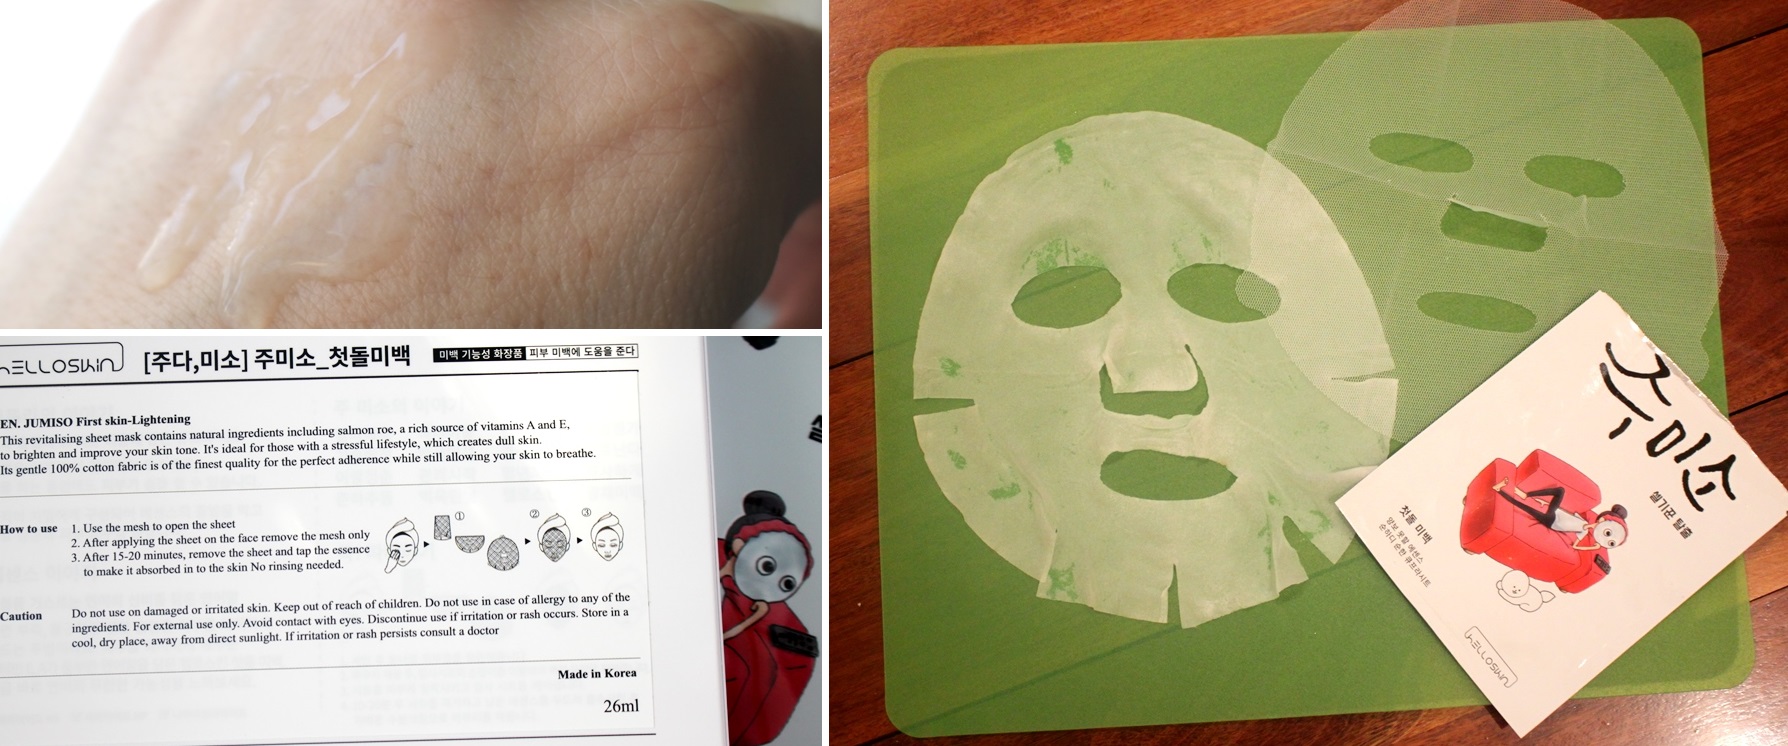 Style Korean Glowing Clover Set - HelloSkin Jumiso First Skin Lightening Mask